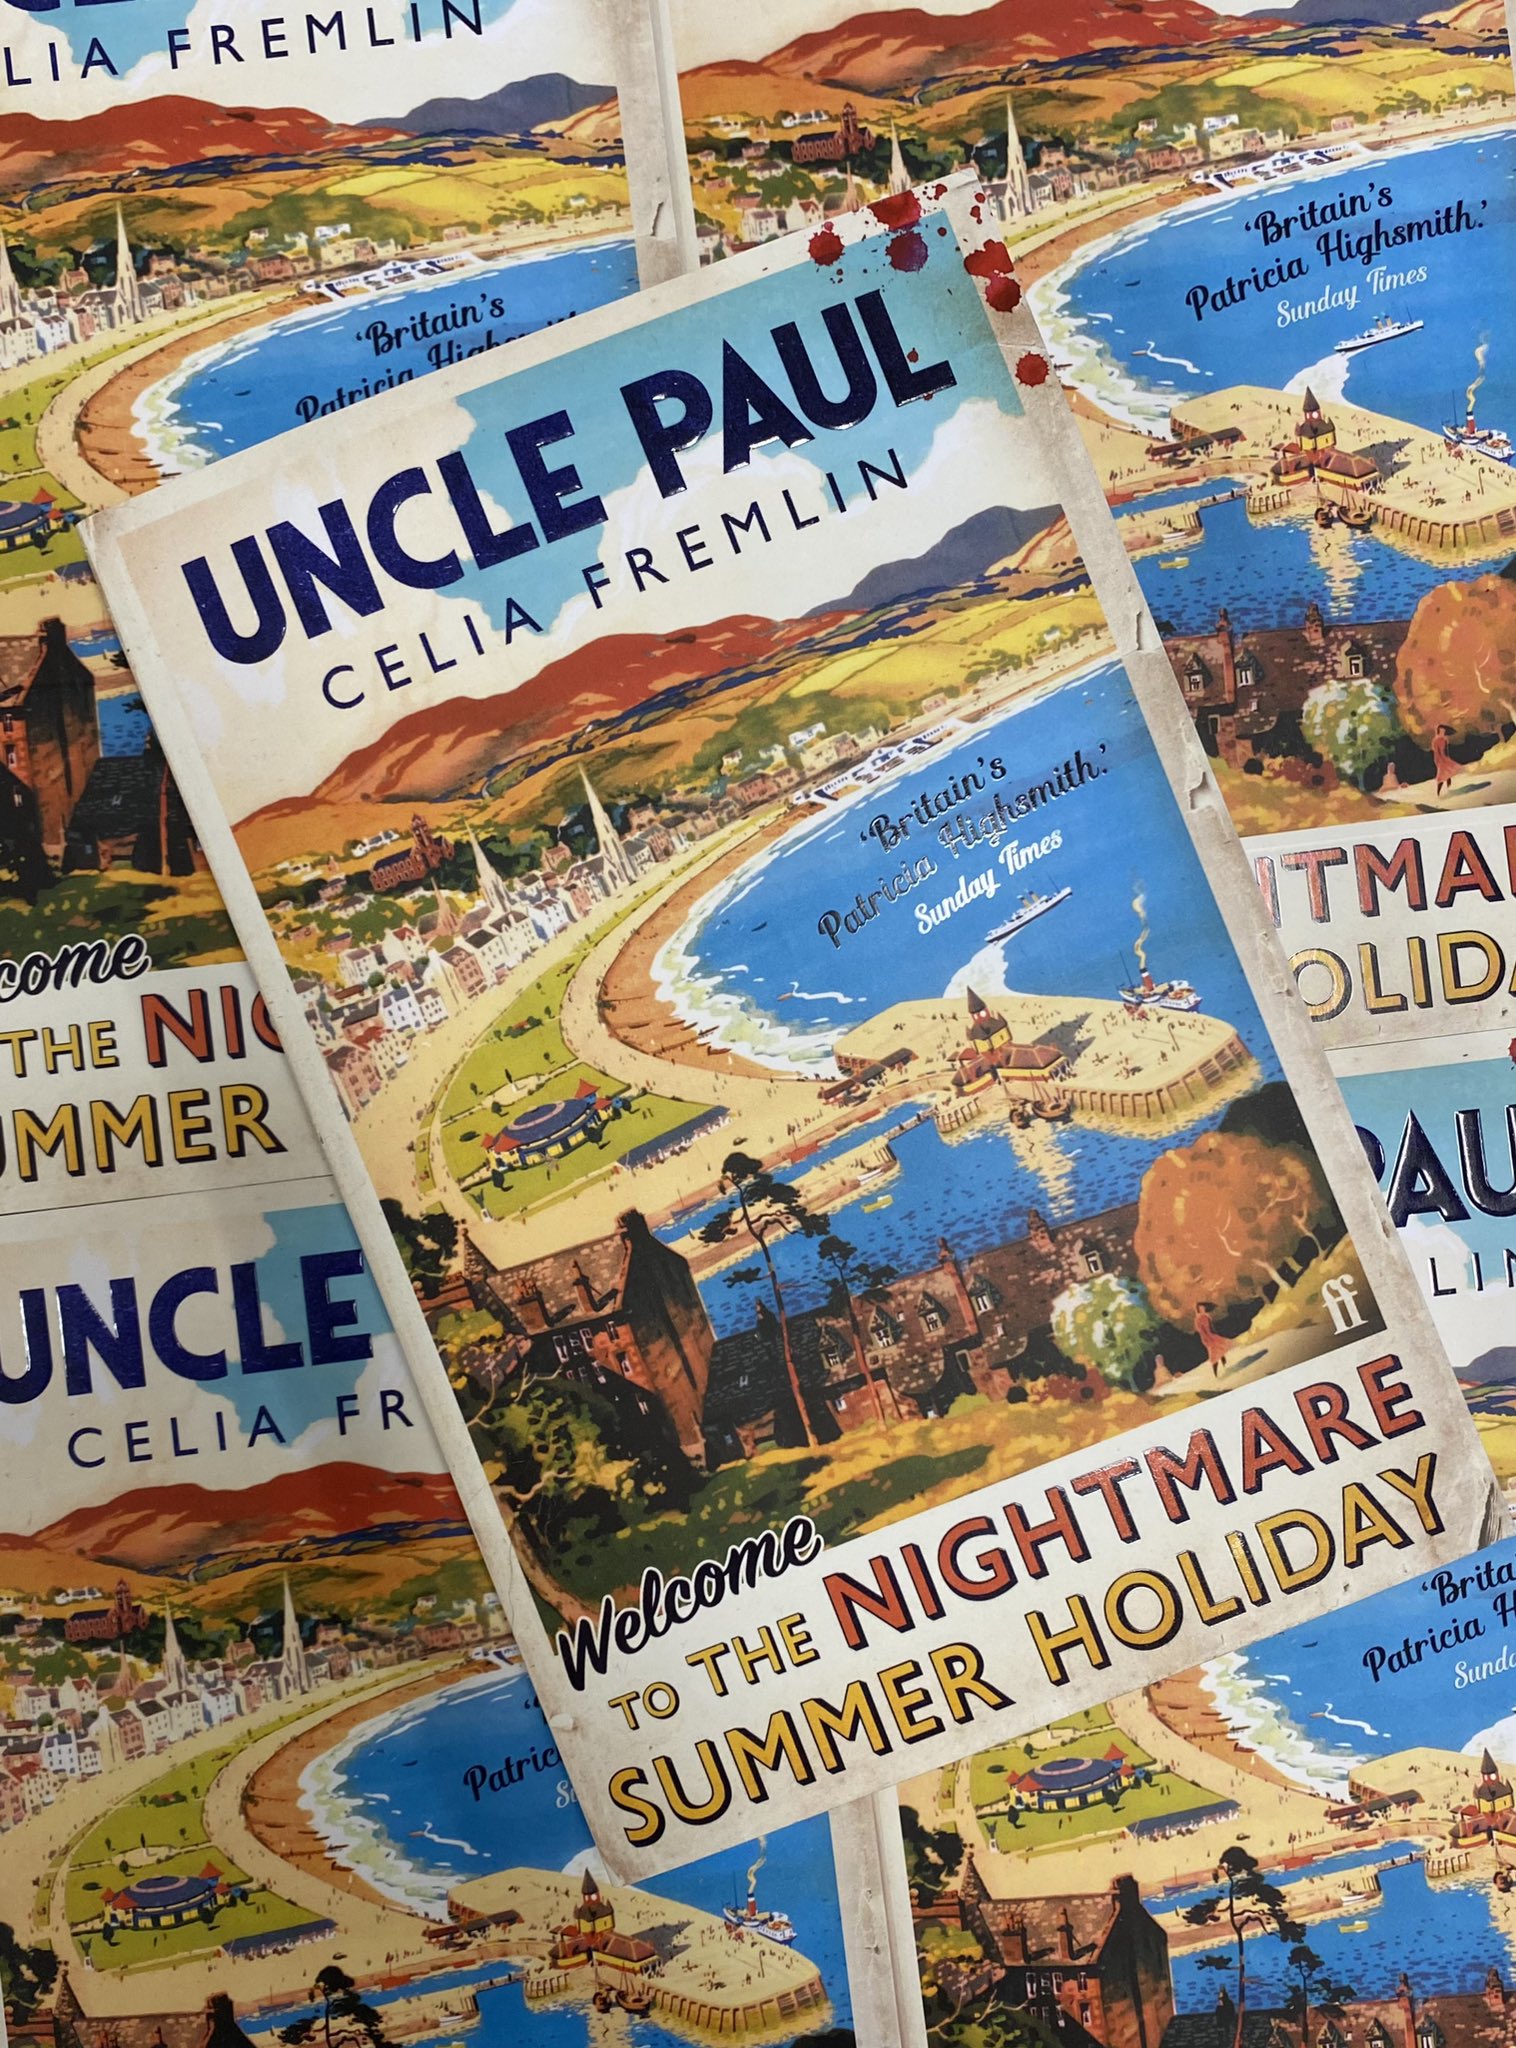 Uncle Paul by Celia Fremlin